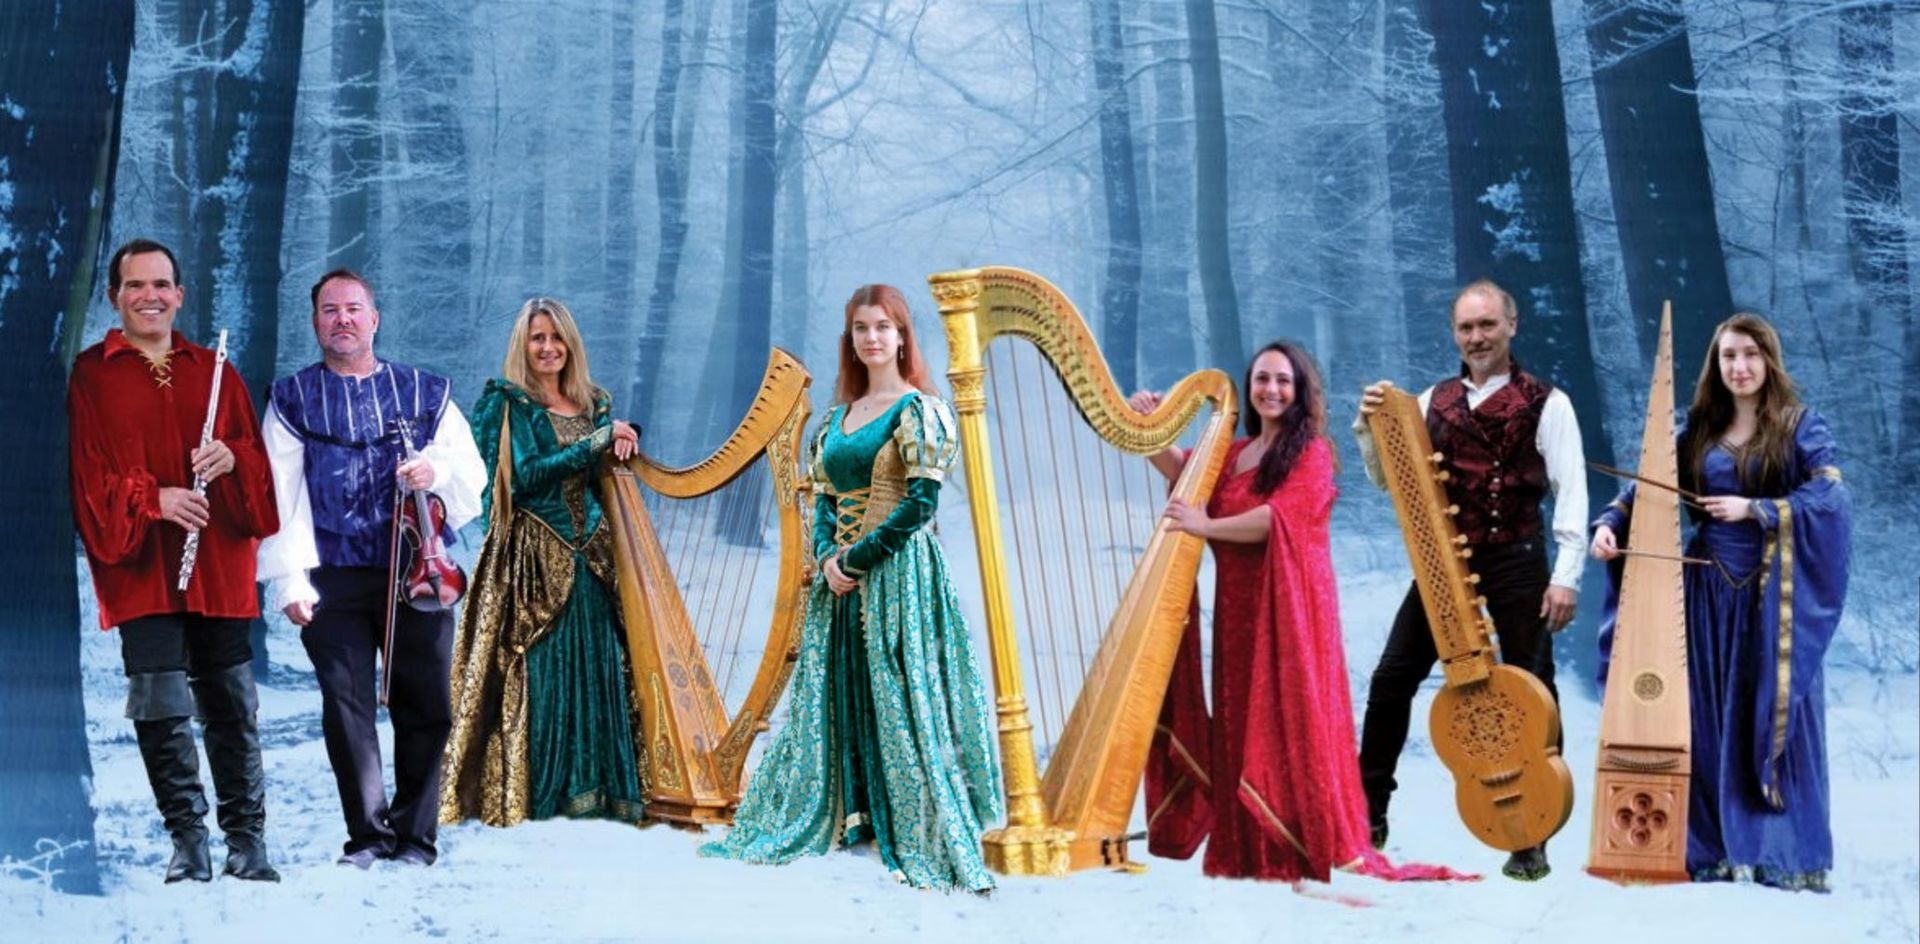 The Winter Harp Ensemble, Sechelt, British Columbia, Canada